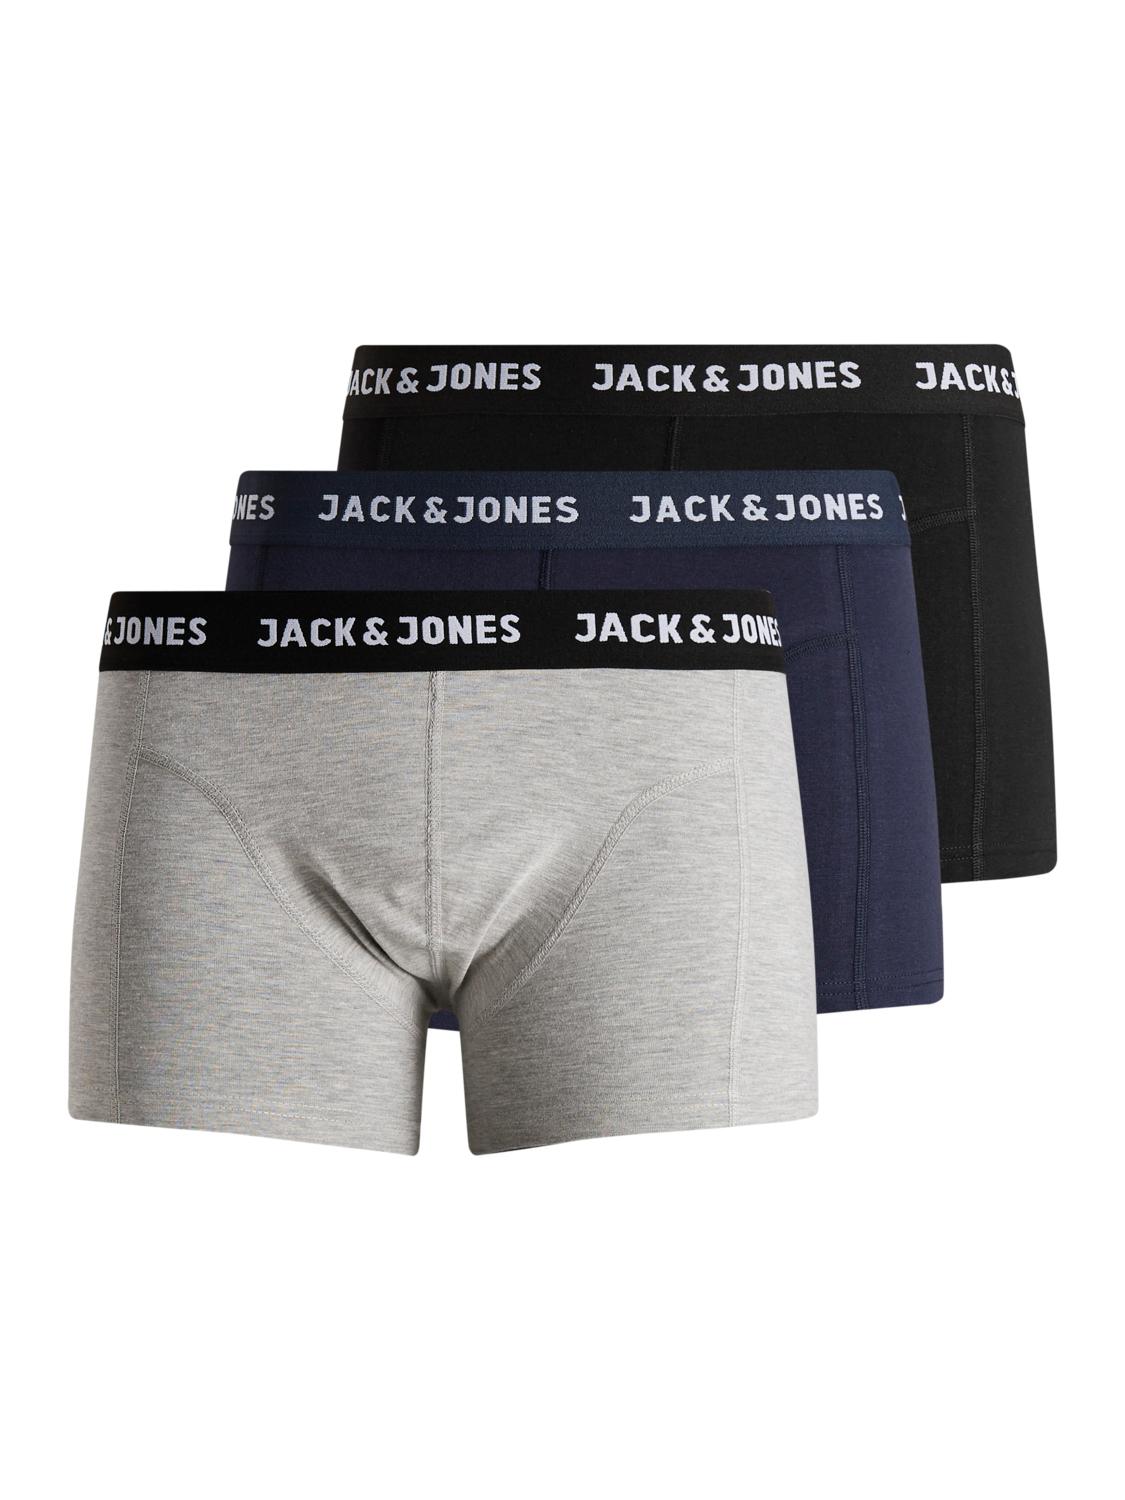 JACK & JONES Muške bokserice 12160750, 3 komada, Teget, sive, crne